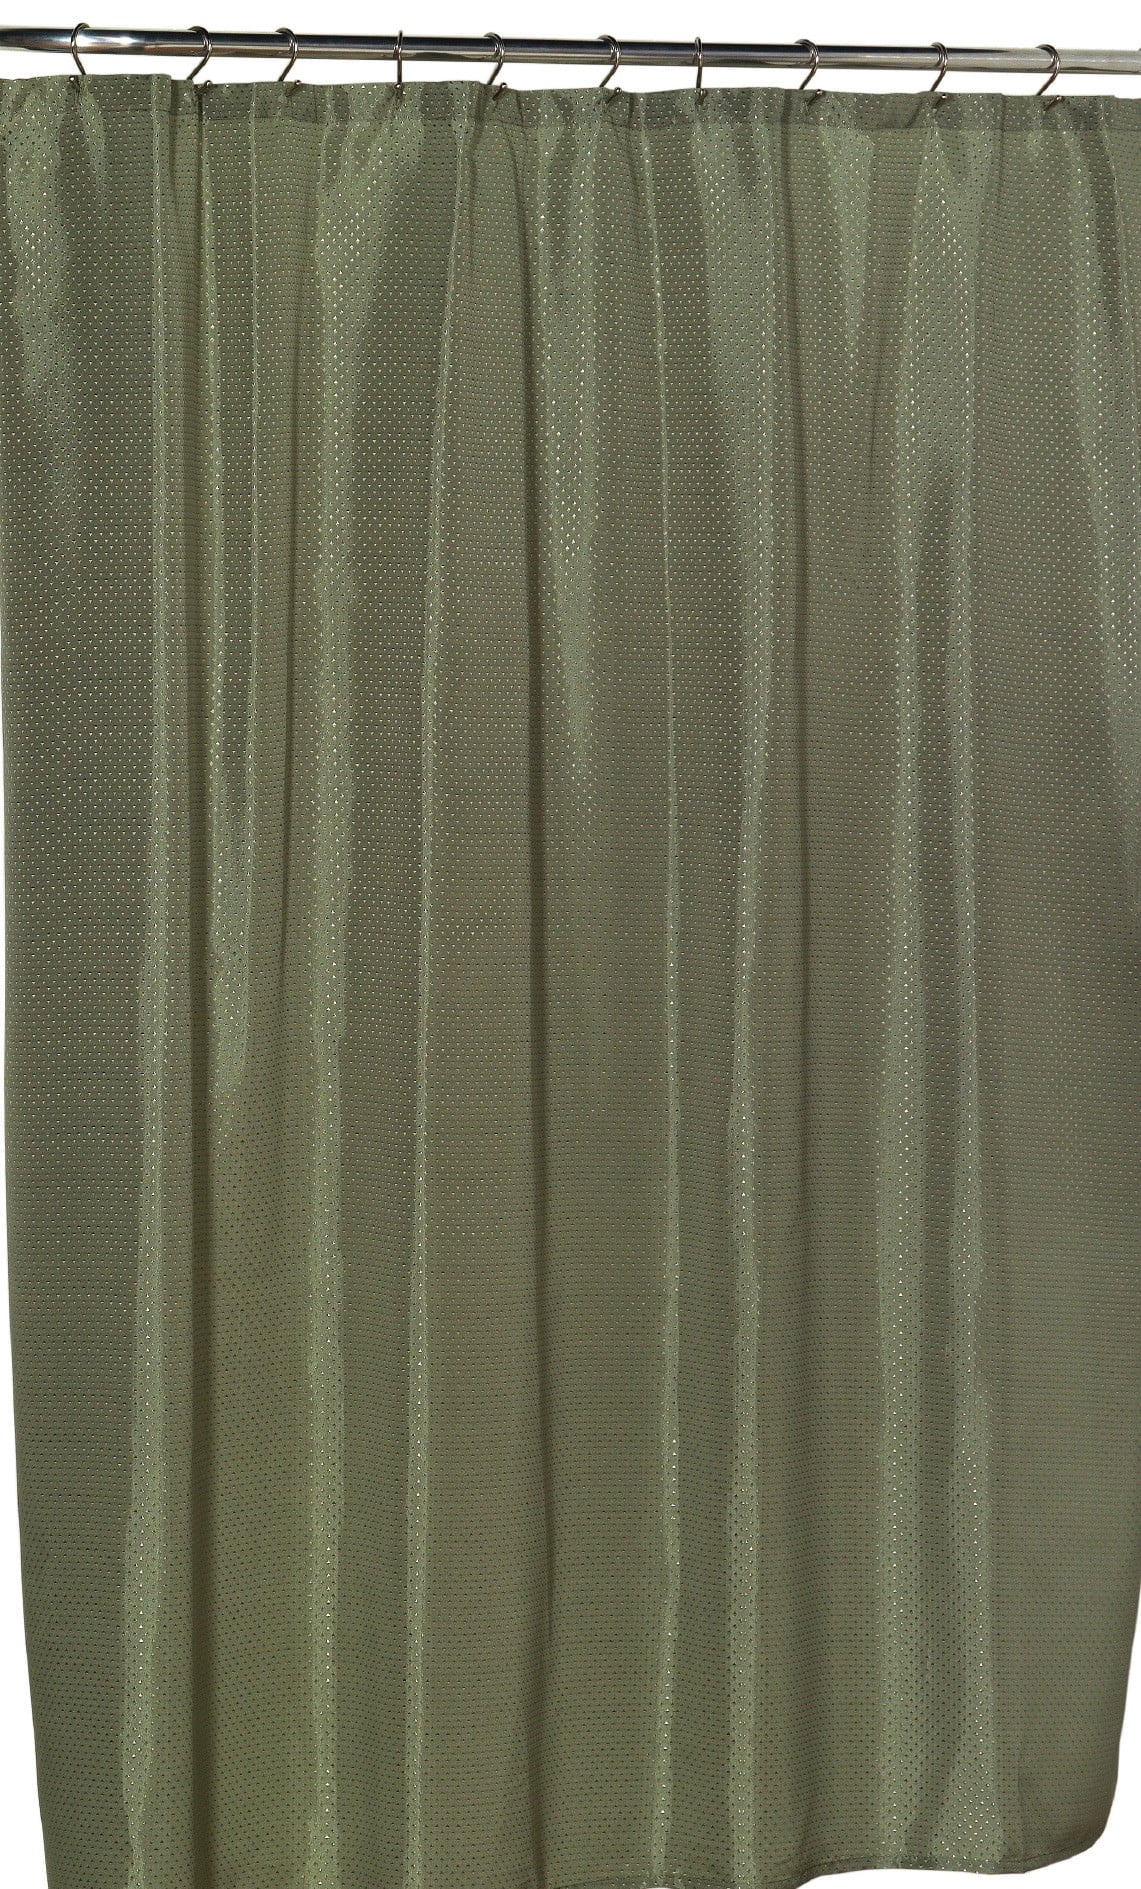 Green 1466 Halo Showerdrape Shower Curtain Polyester 